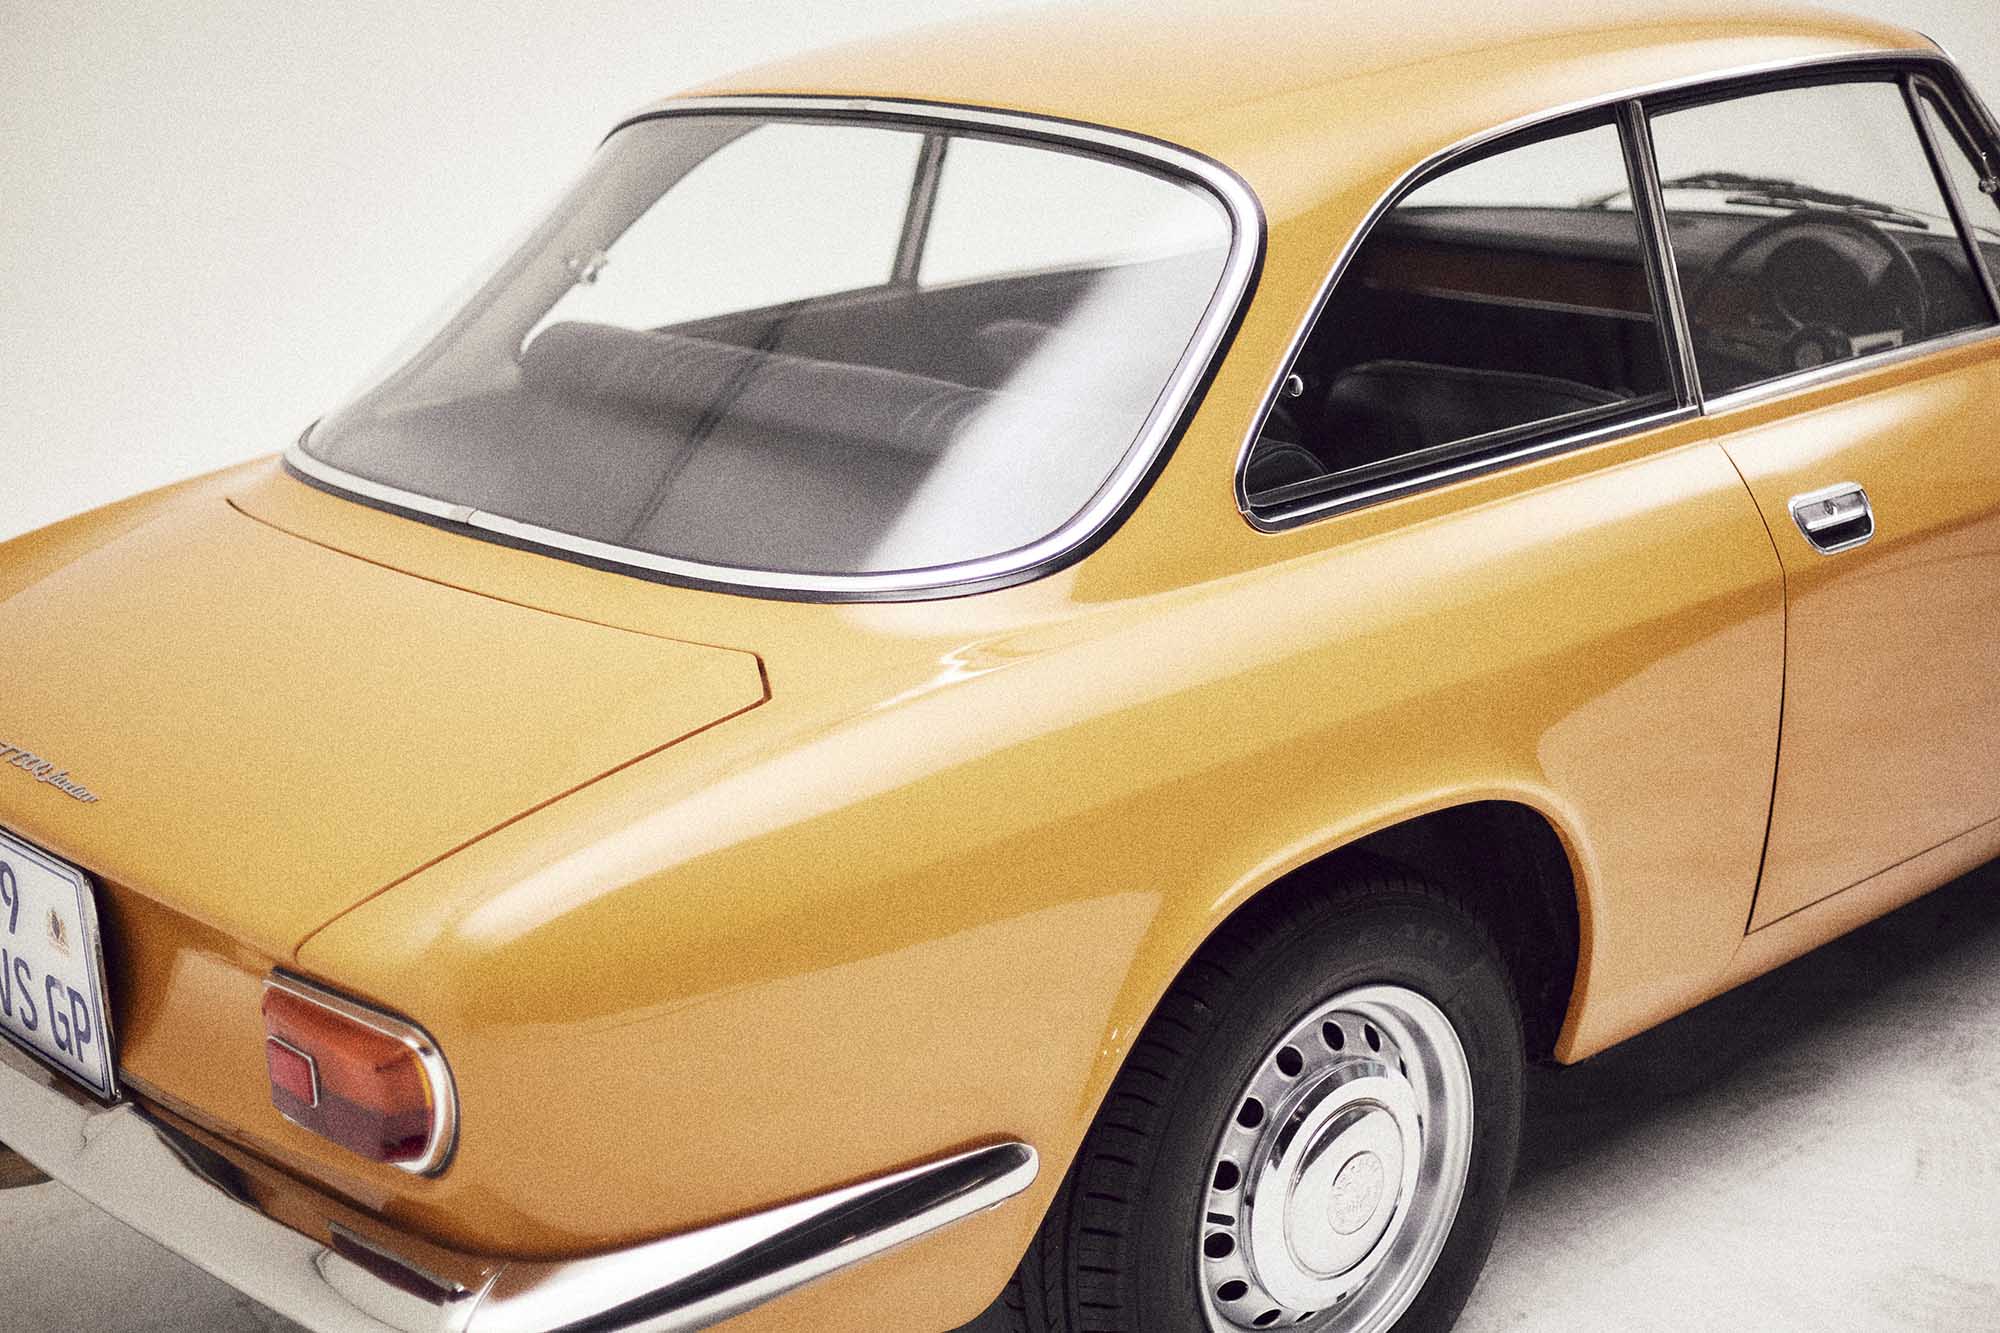 vintage gold alfa romeo shot in studio using sony alpha A1 capturing privates collectors car range